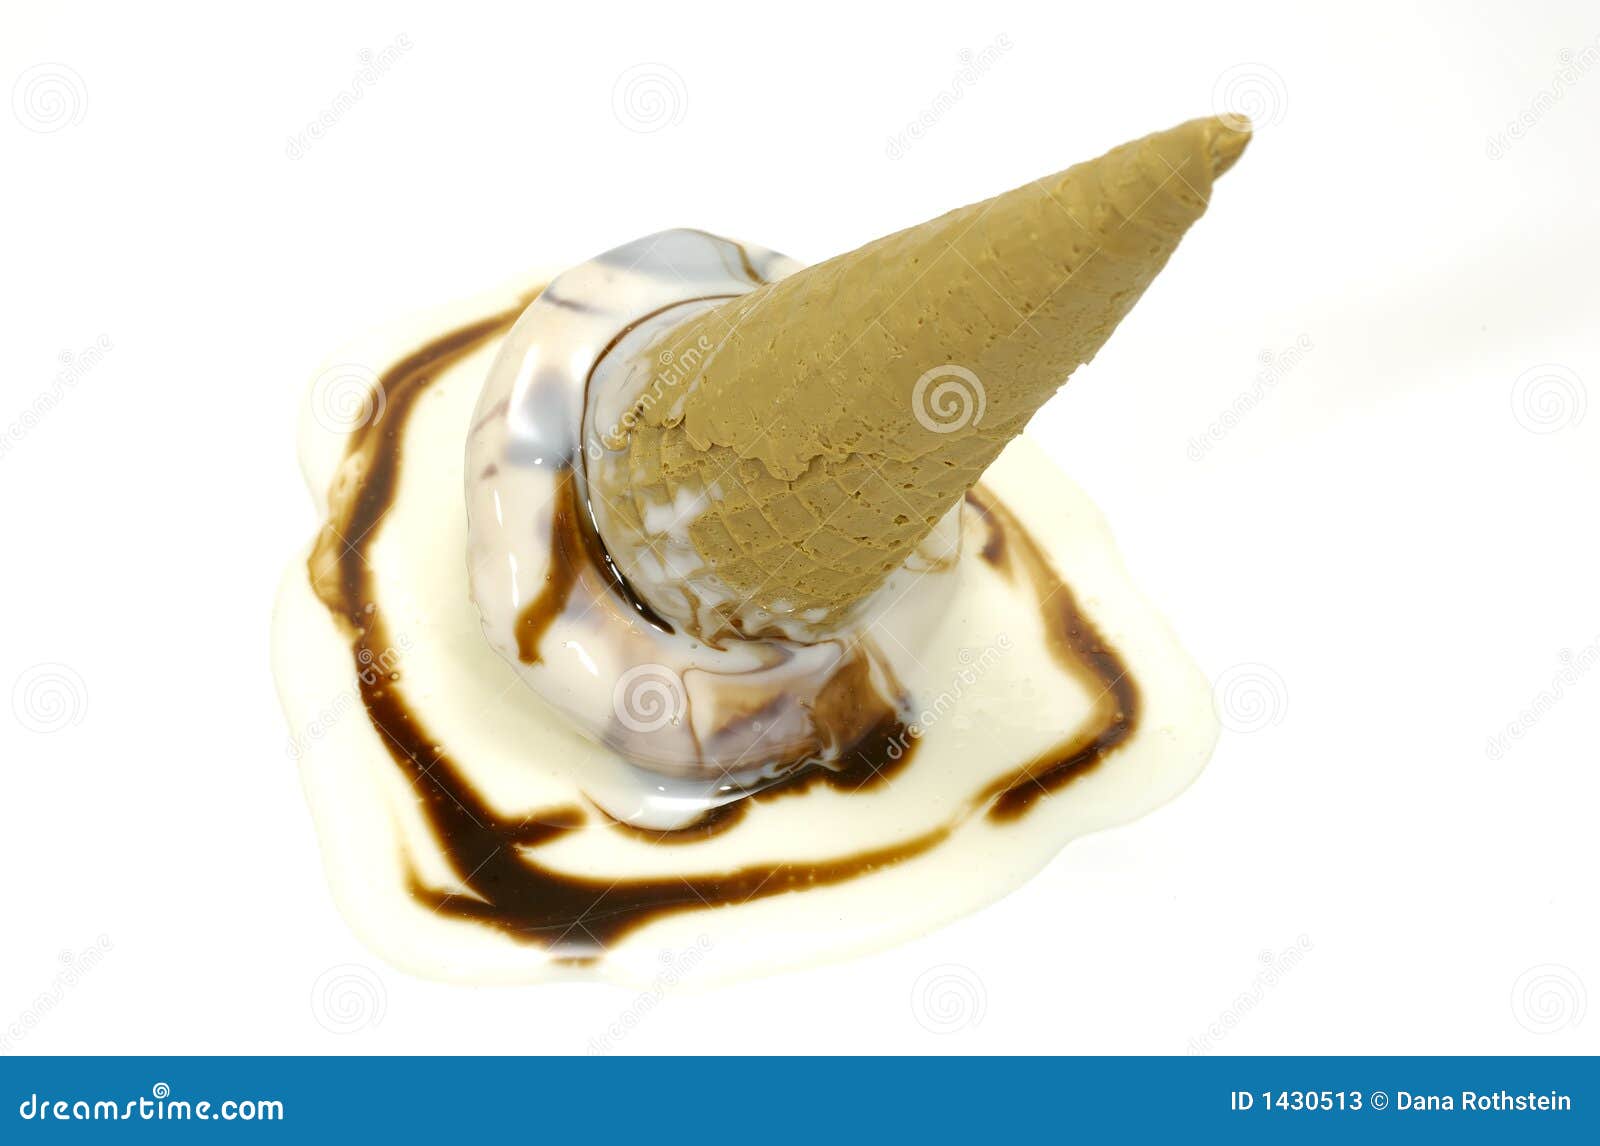 dropped ice cream